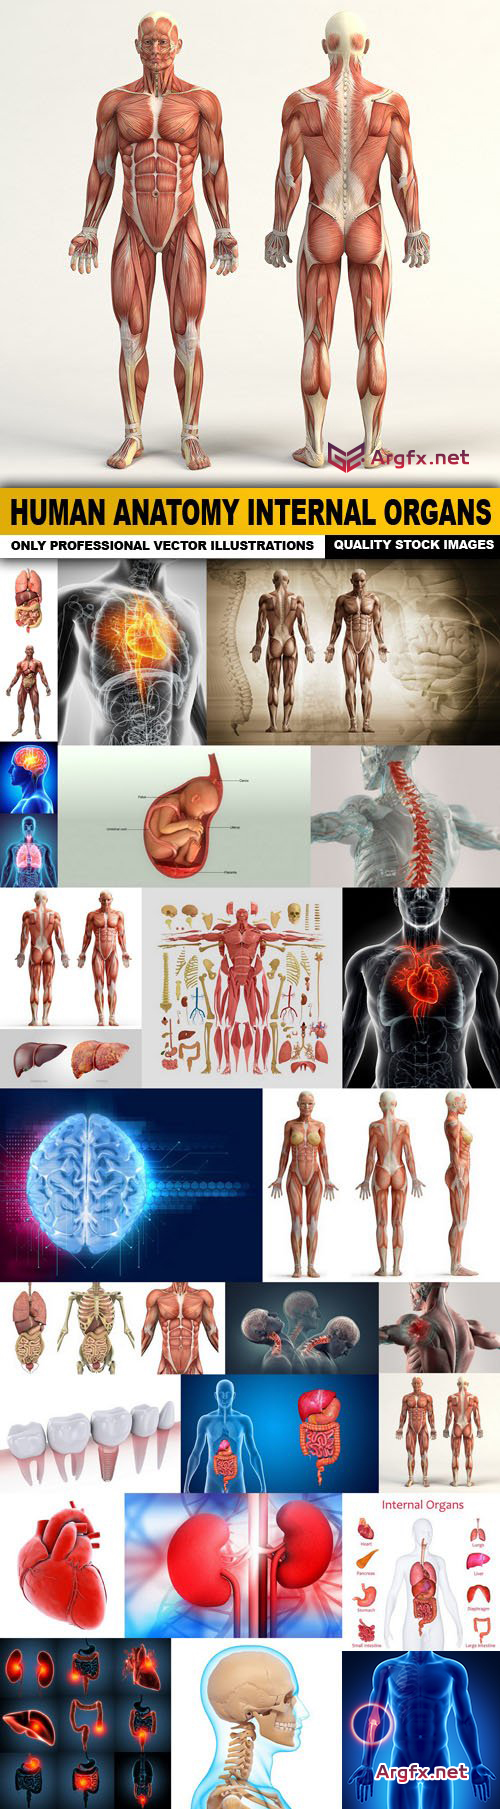  Human Anatomy Internal Organs - 25 HQ Images